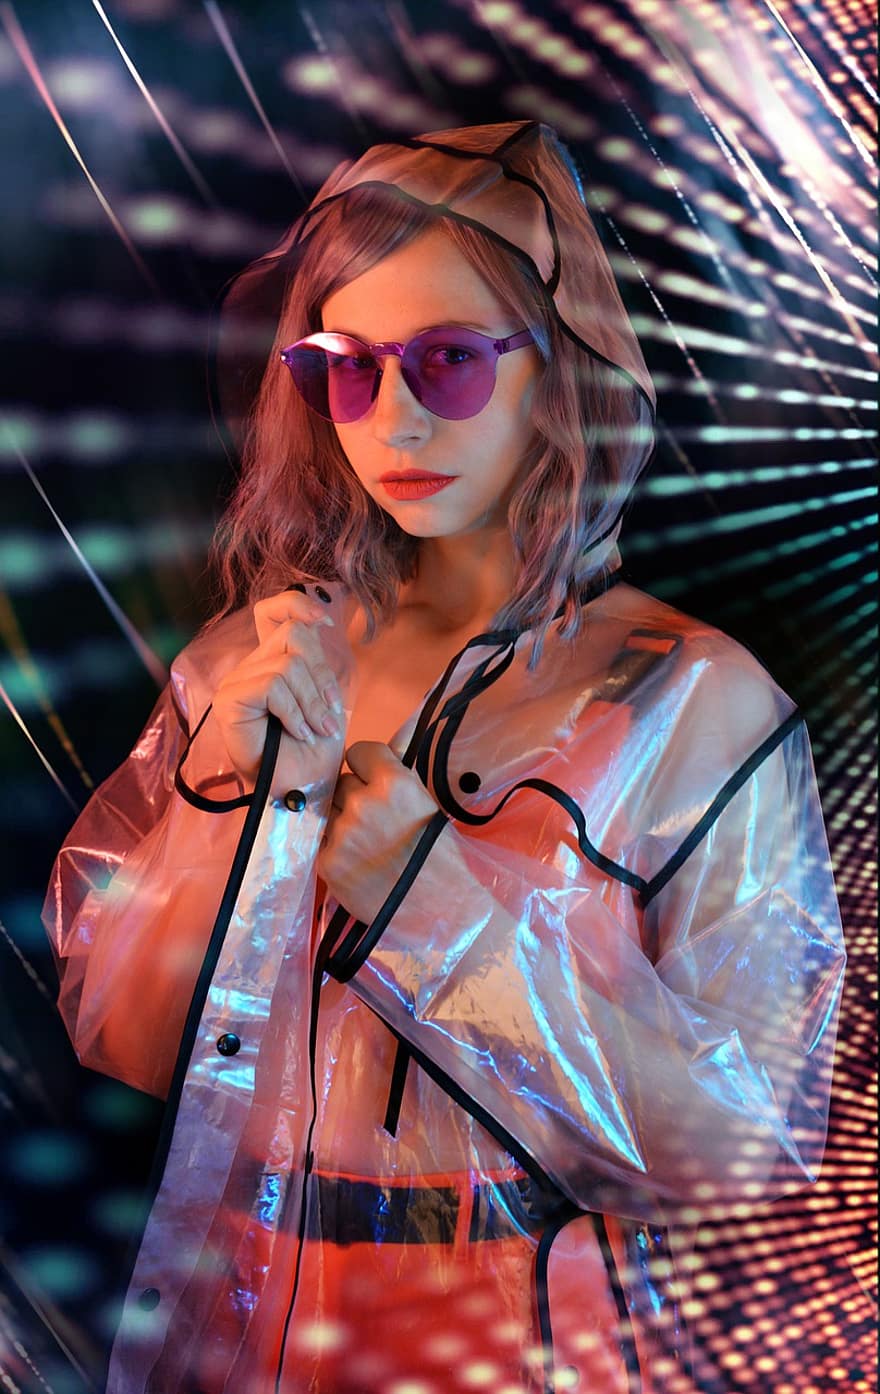 Woman, Glasses, Neon, Futuristic, Future, Lights, Rays, Futurism, Cyber Punk, Fiction